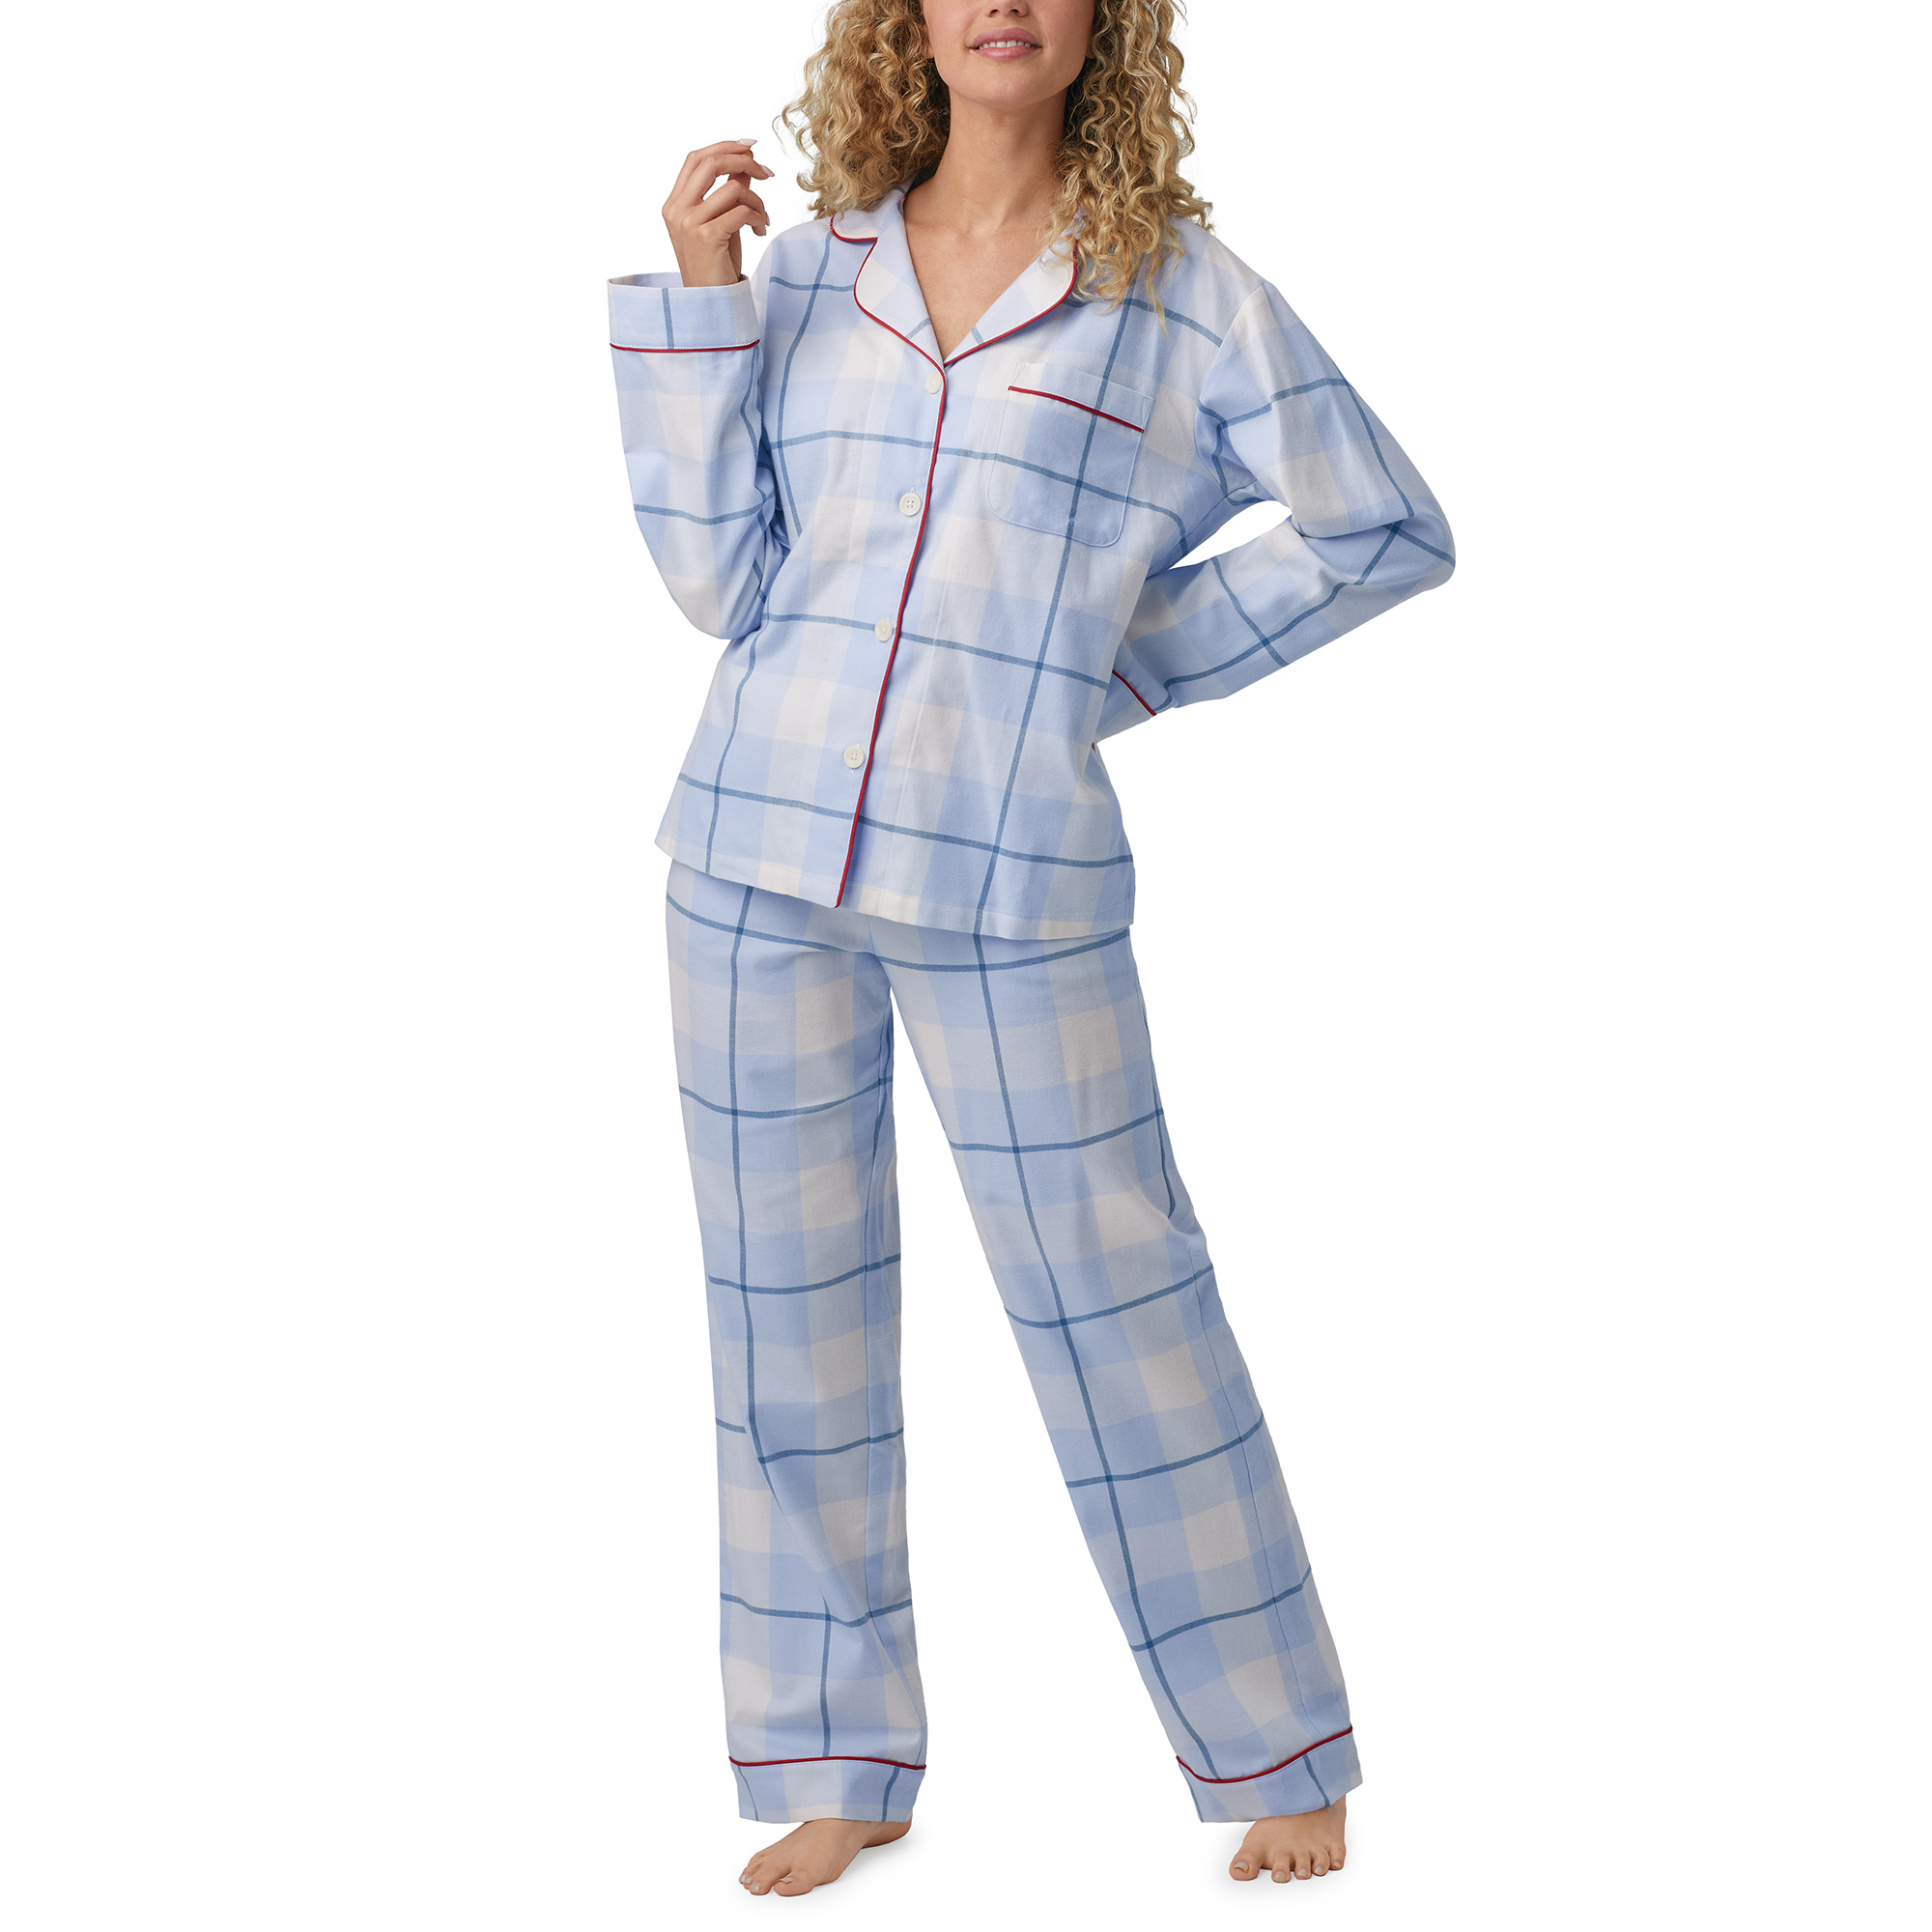 Women's Pajama Set - Blue Plaid, Medium S-24165BLU-M - Uline